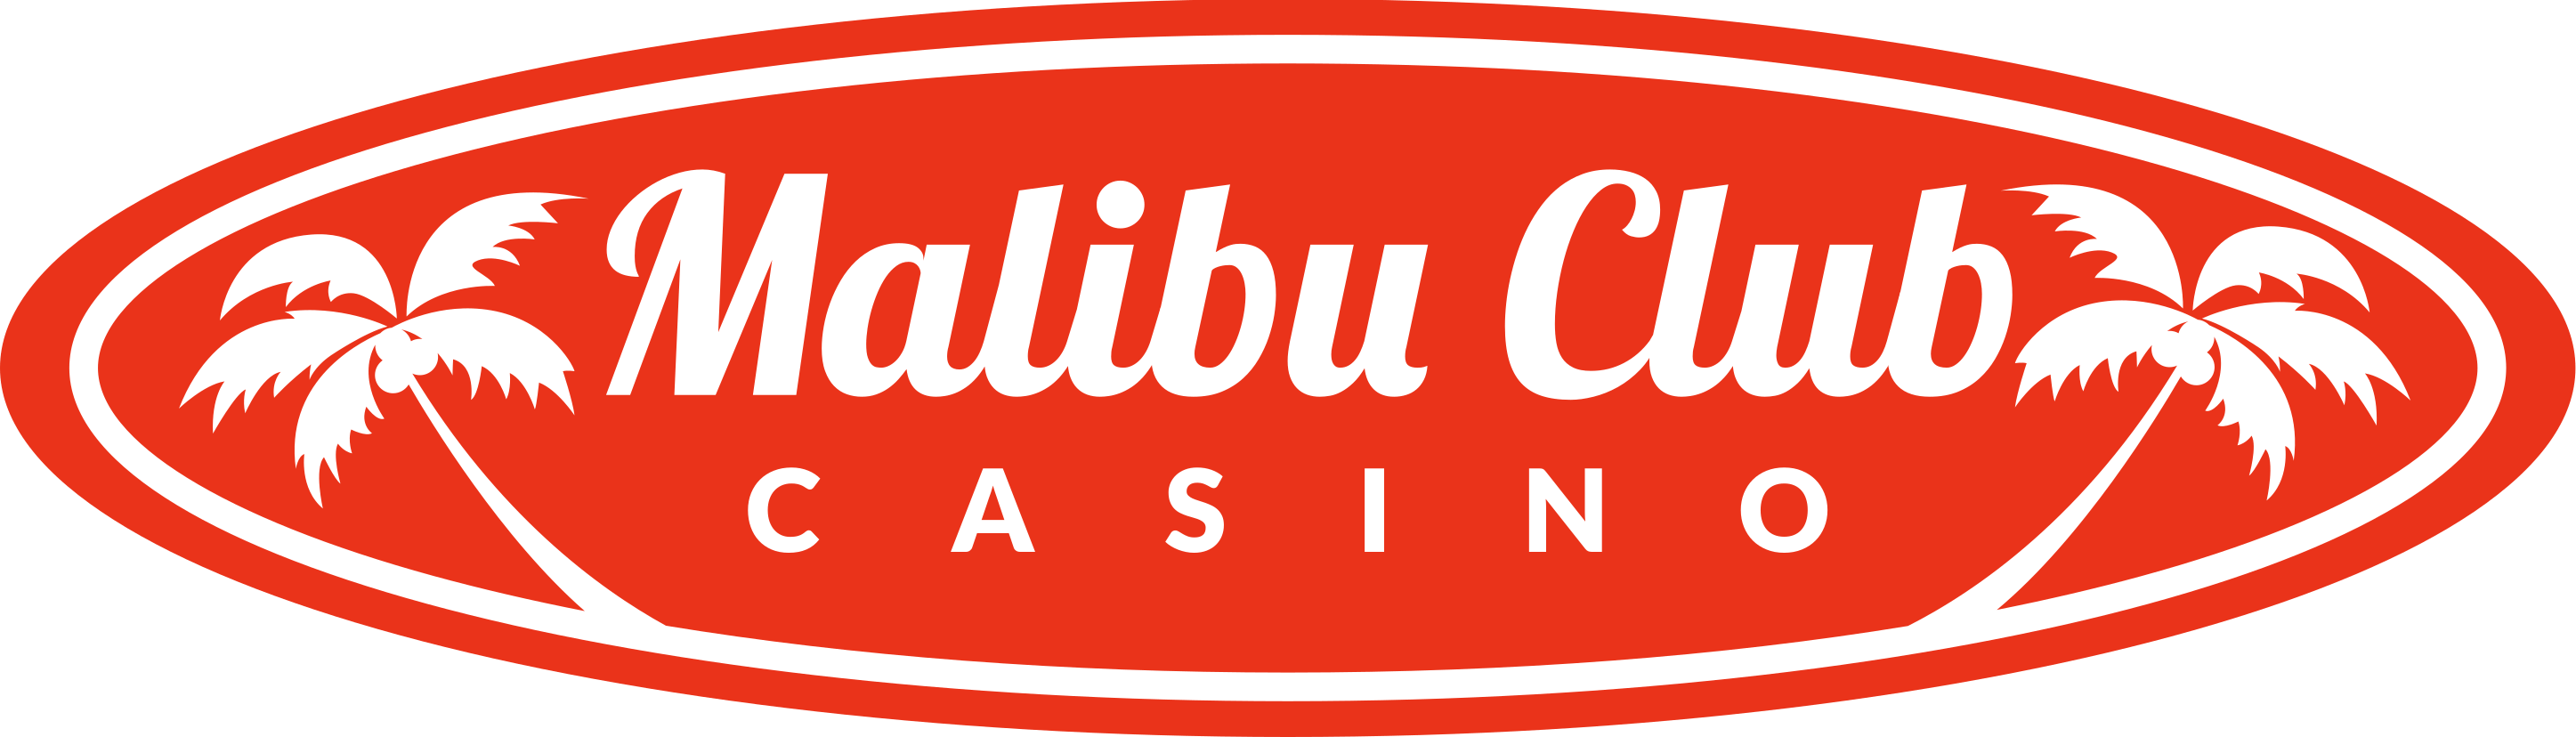 https://wp.casinoshub.com/wp-content/uploads/2020/07/malibu-club-casino-logo.png